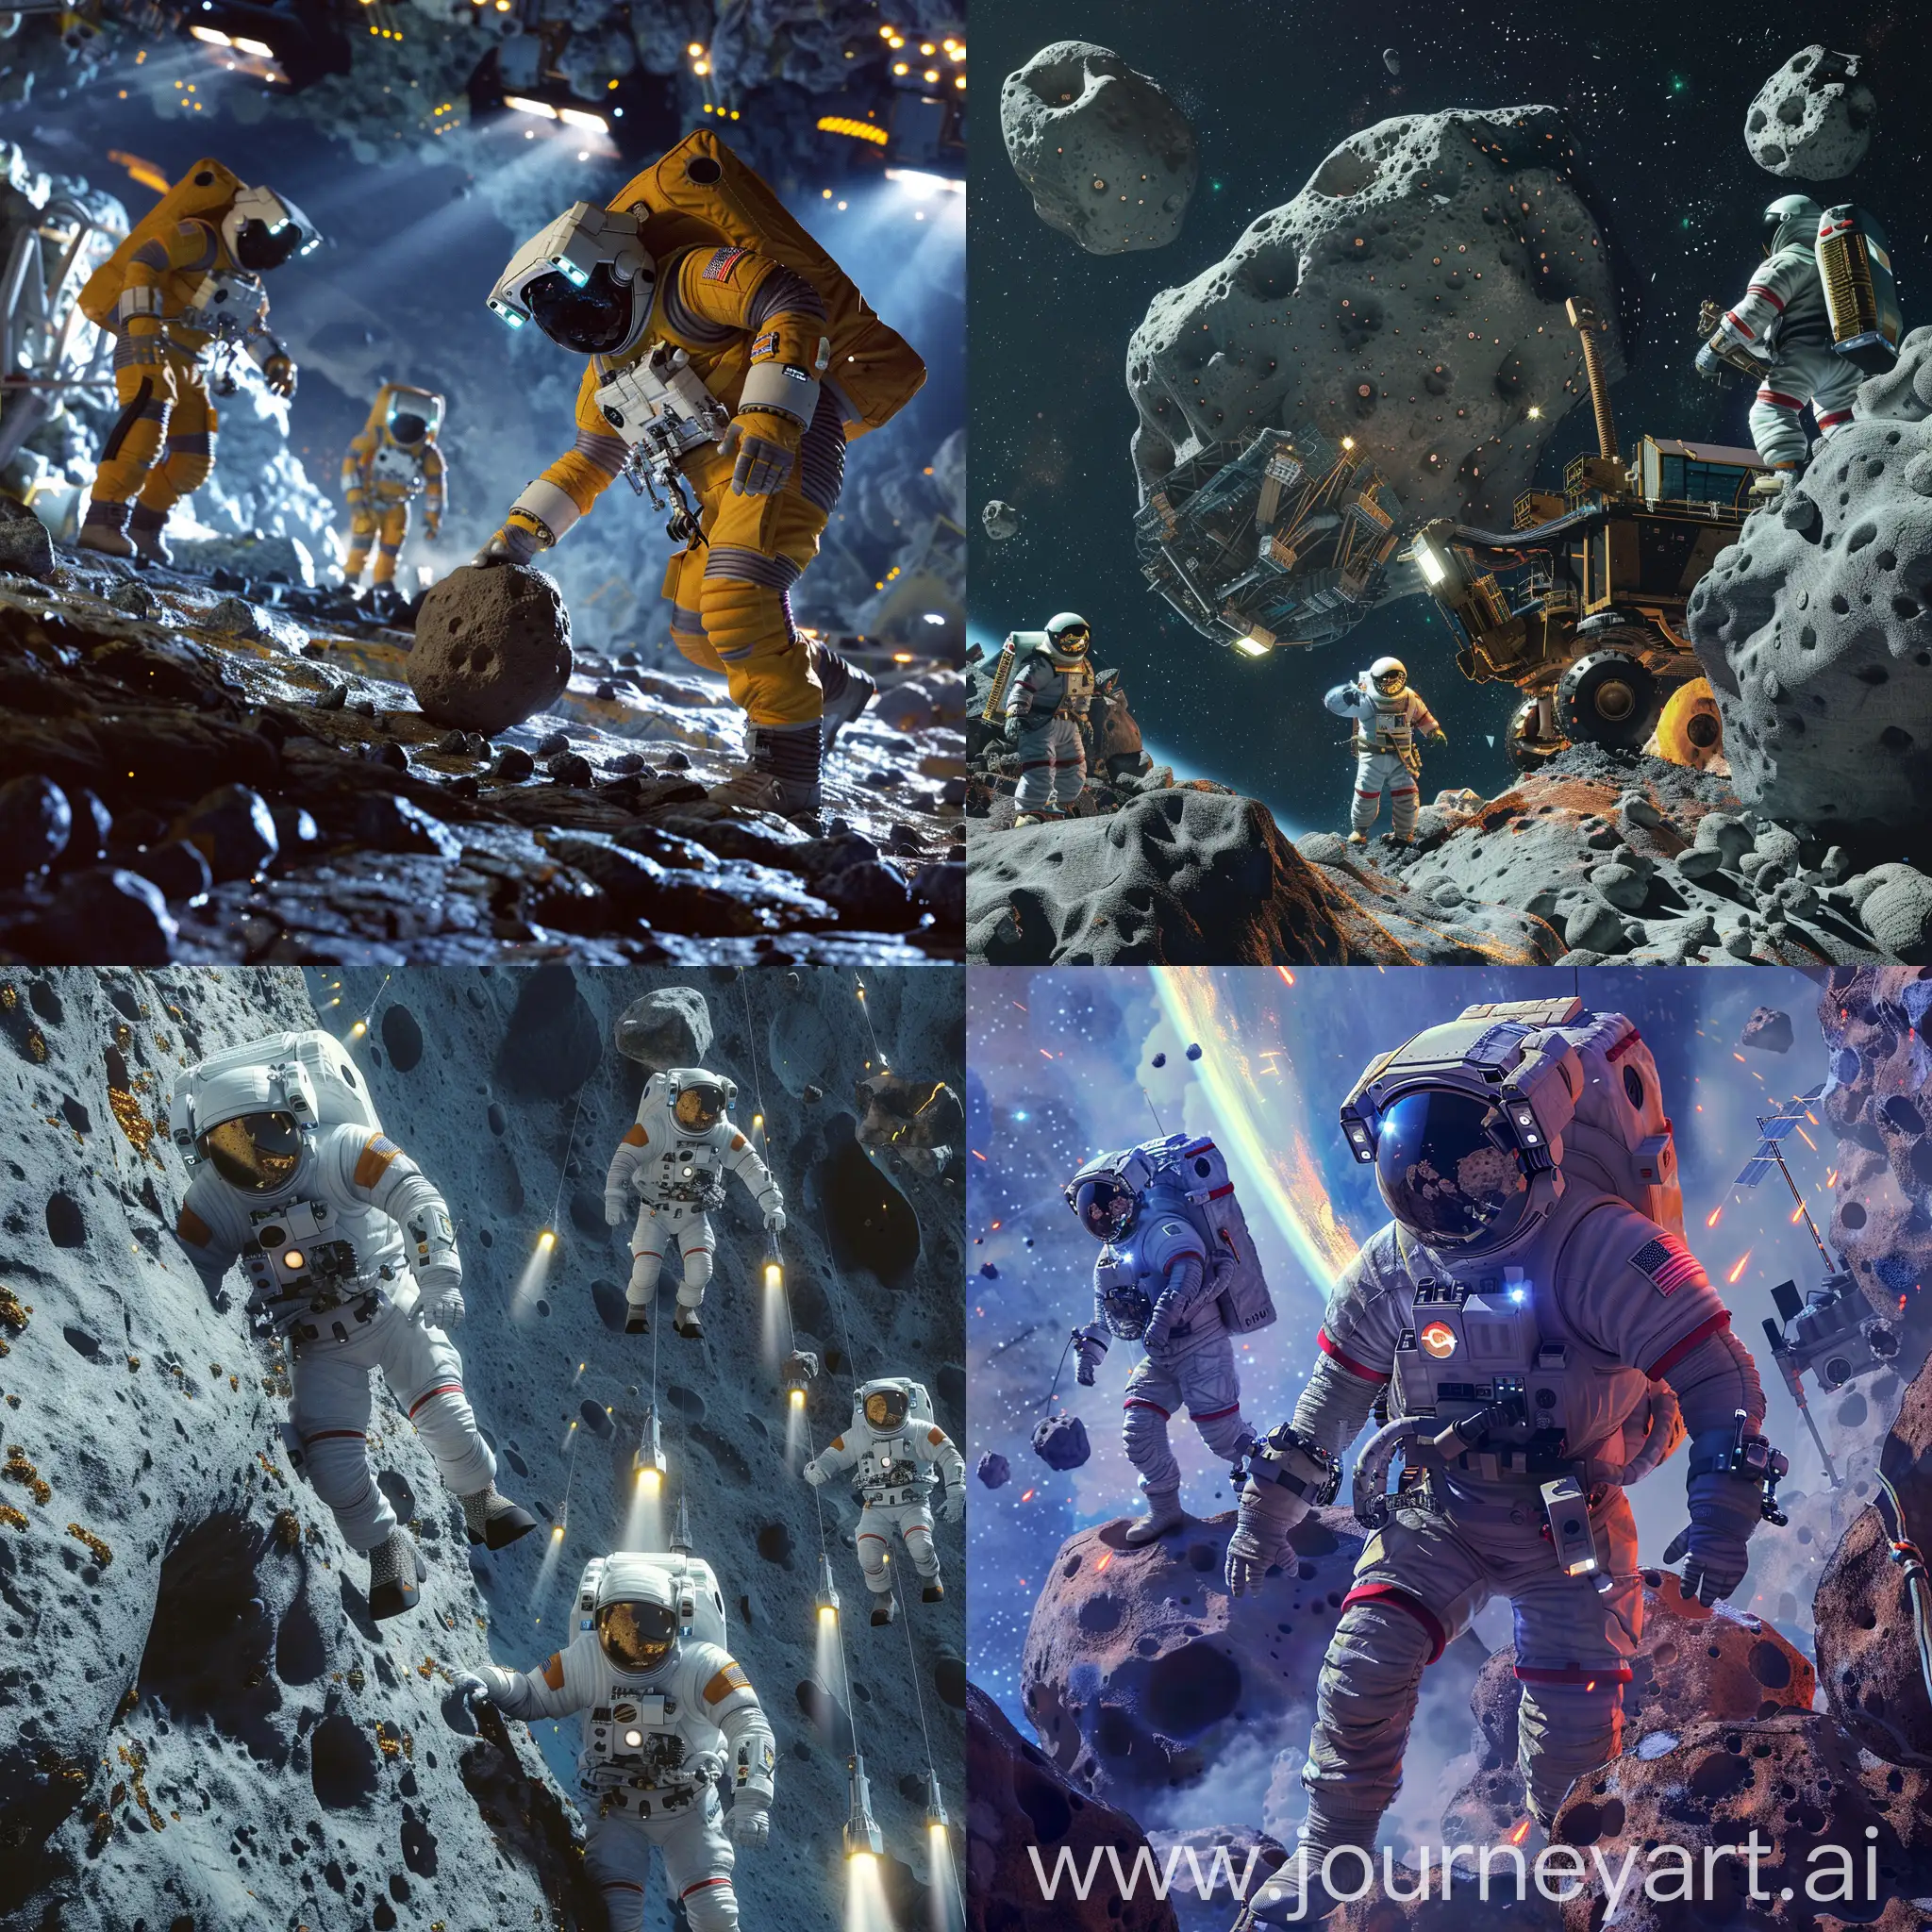 Robotic-Astronauts-Mining-Asteroids-in-a-Futuristic-Space-Colony